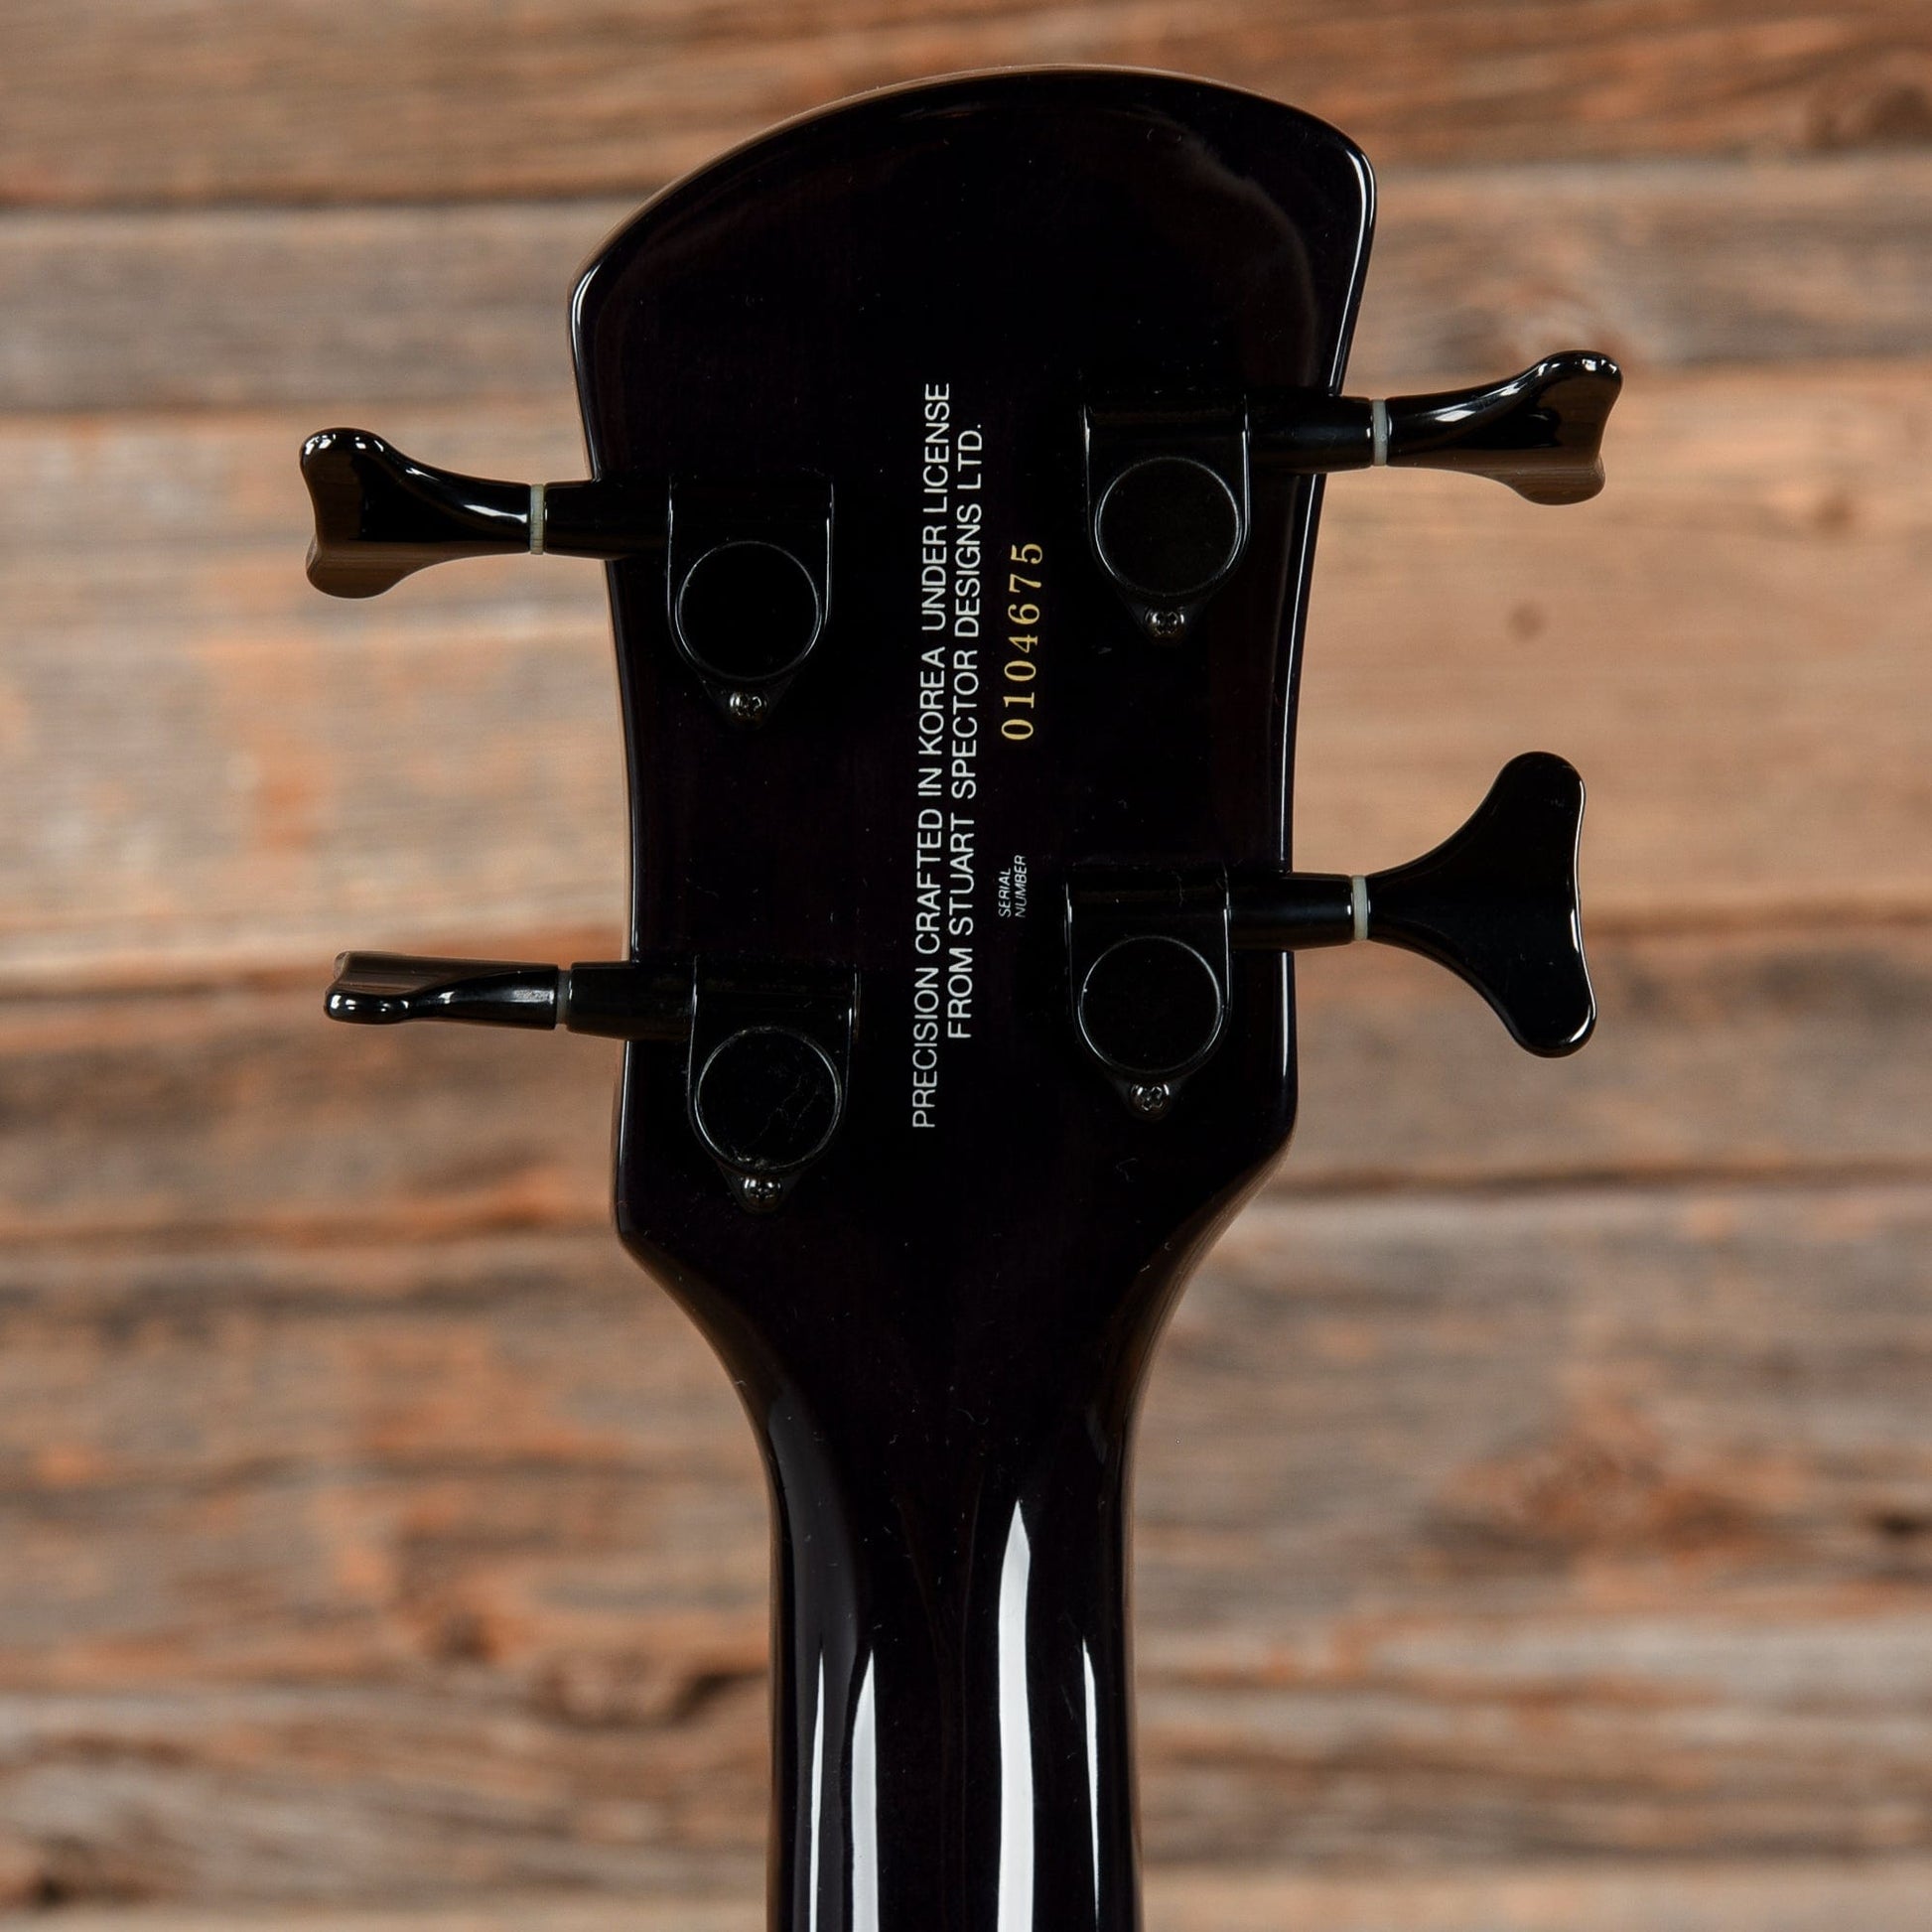 Spector NS-2000/4 Transparent Black Bass Guitars / 4-String